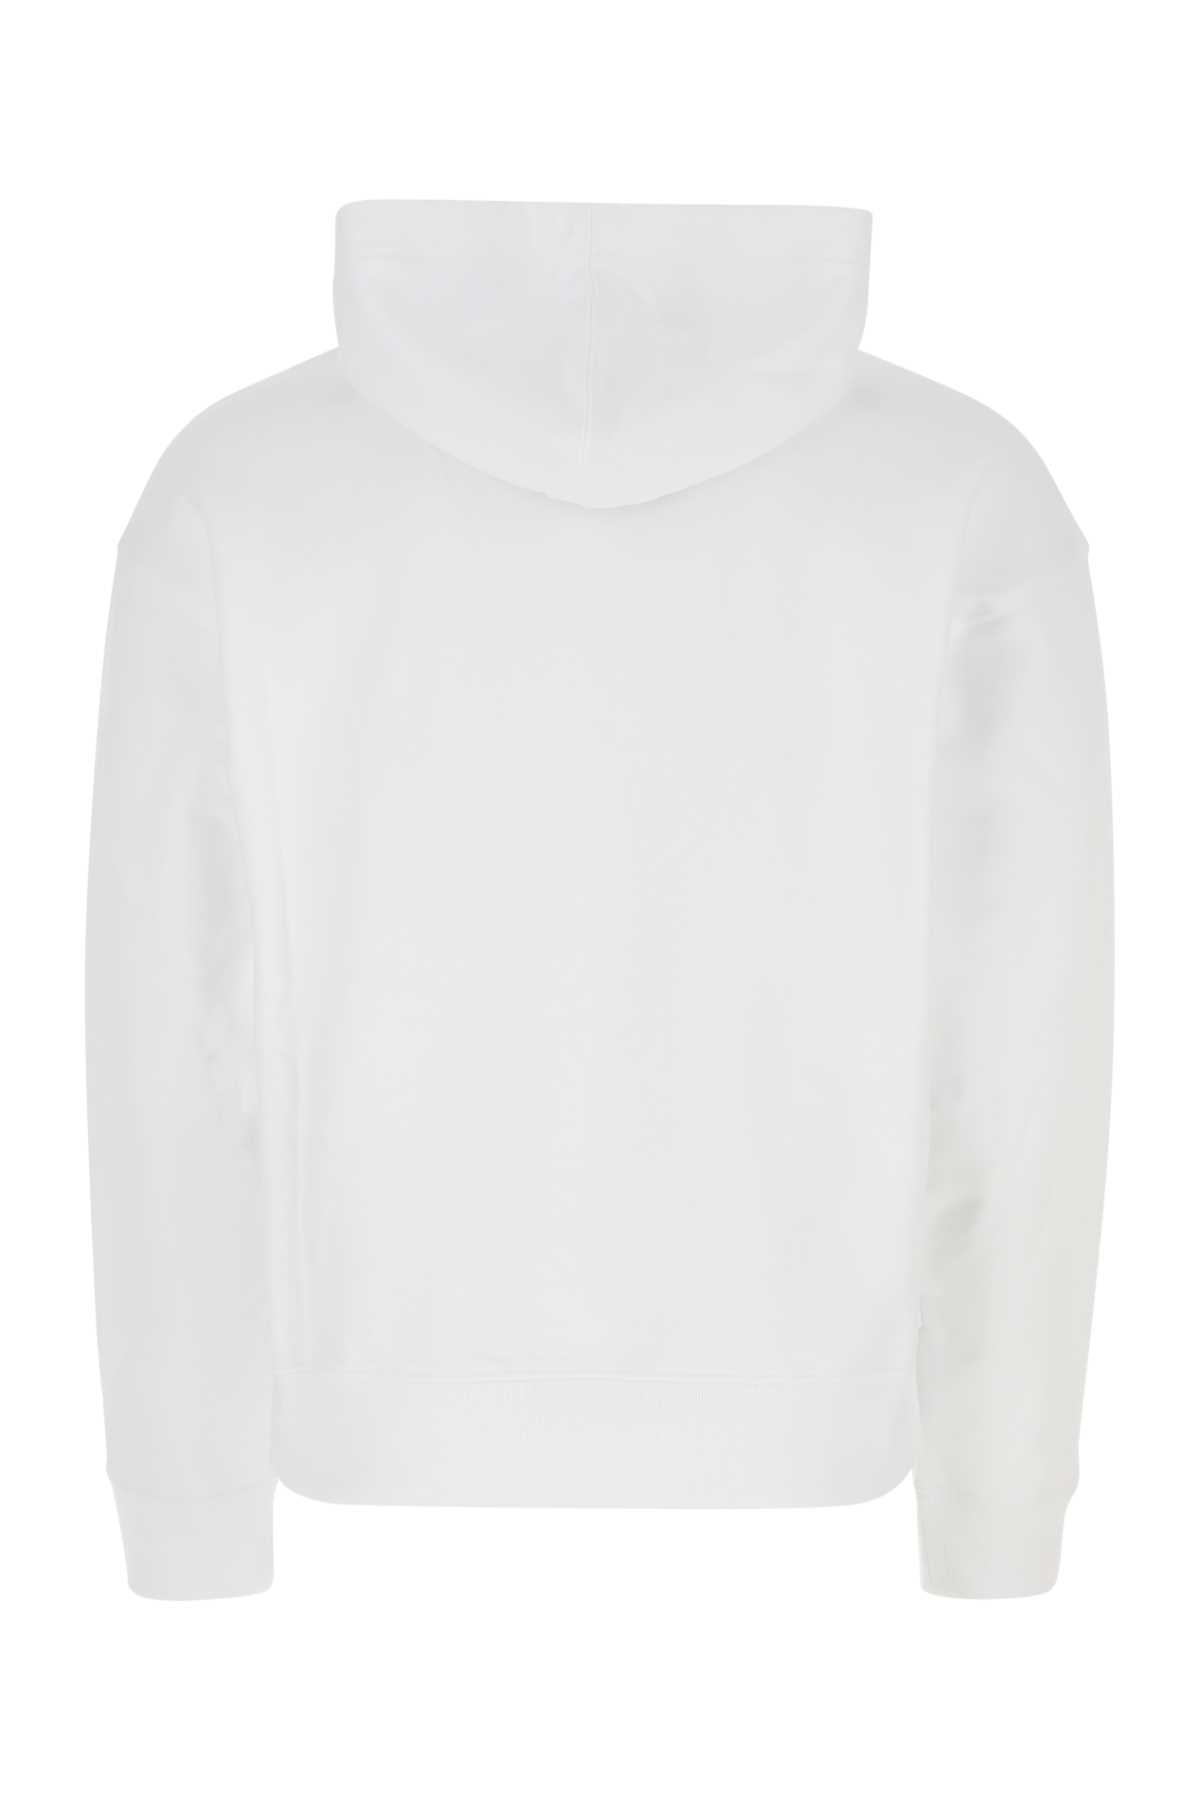 Moschino White Cotton Sweatshirt In 1001